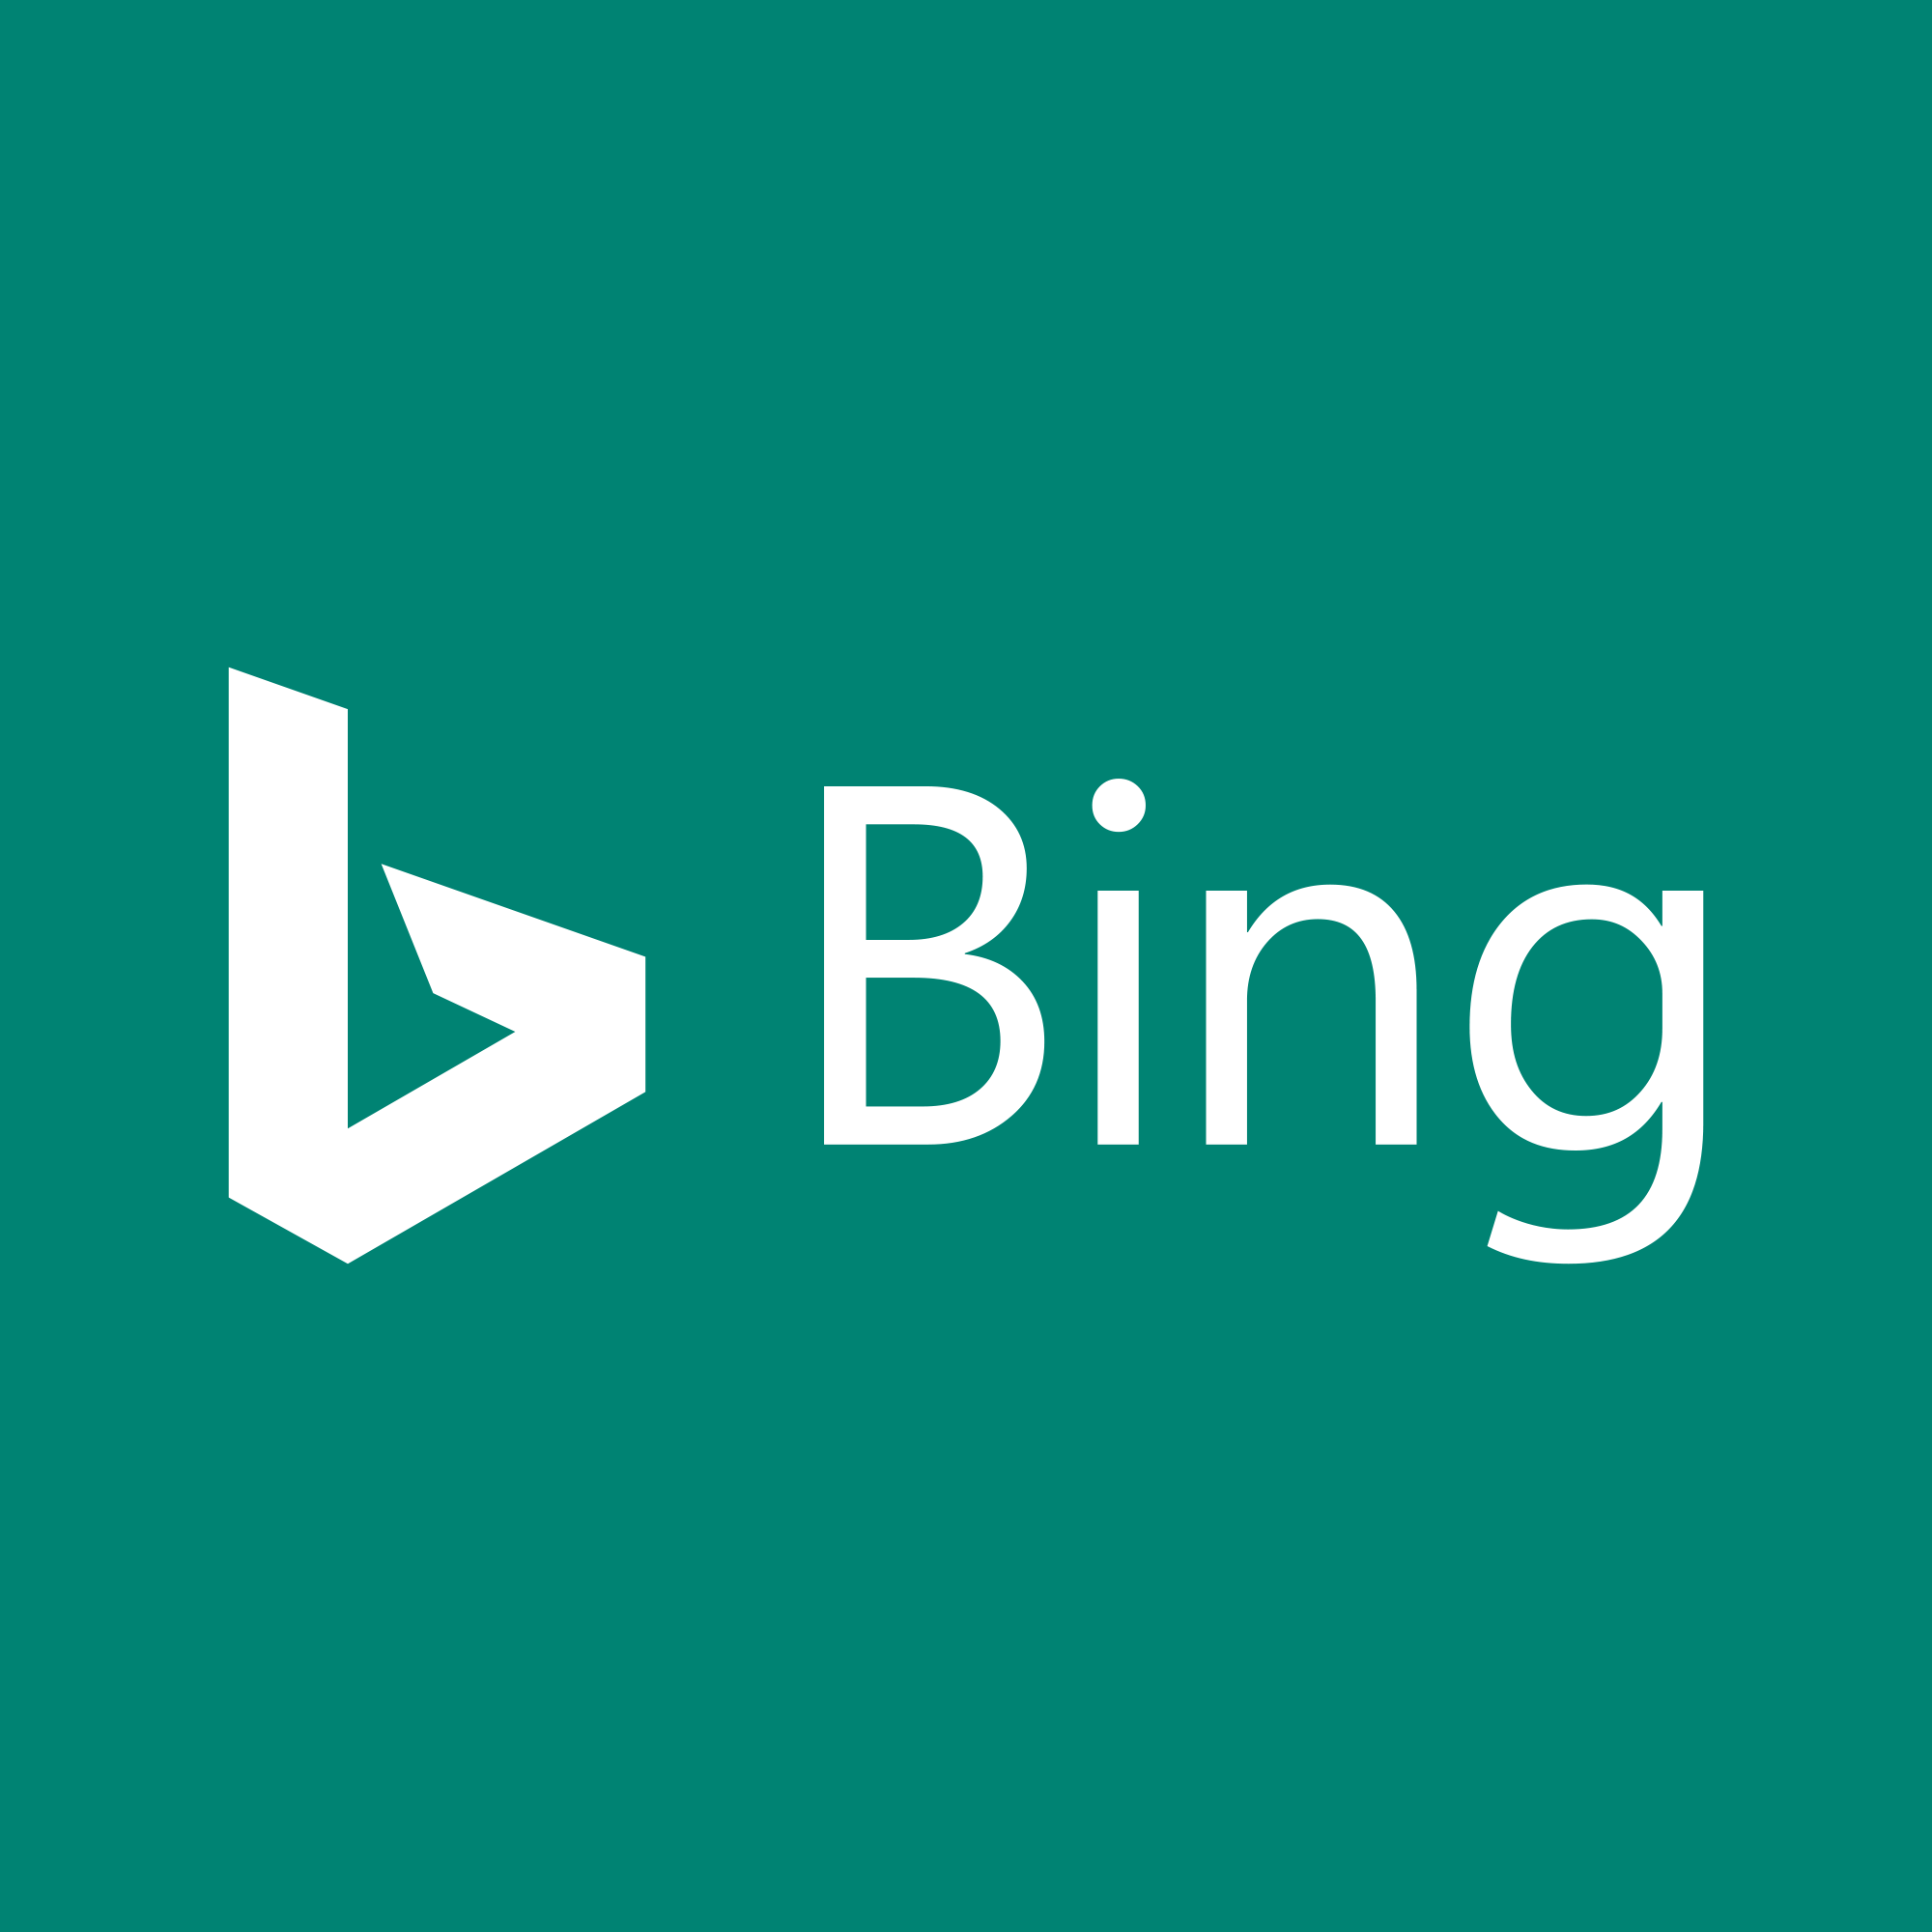 Www bing com image. Bing Поисковая система. Значок бинг Поисковая система. Майкрософт бинг.